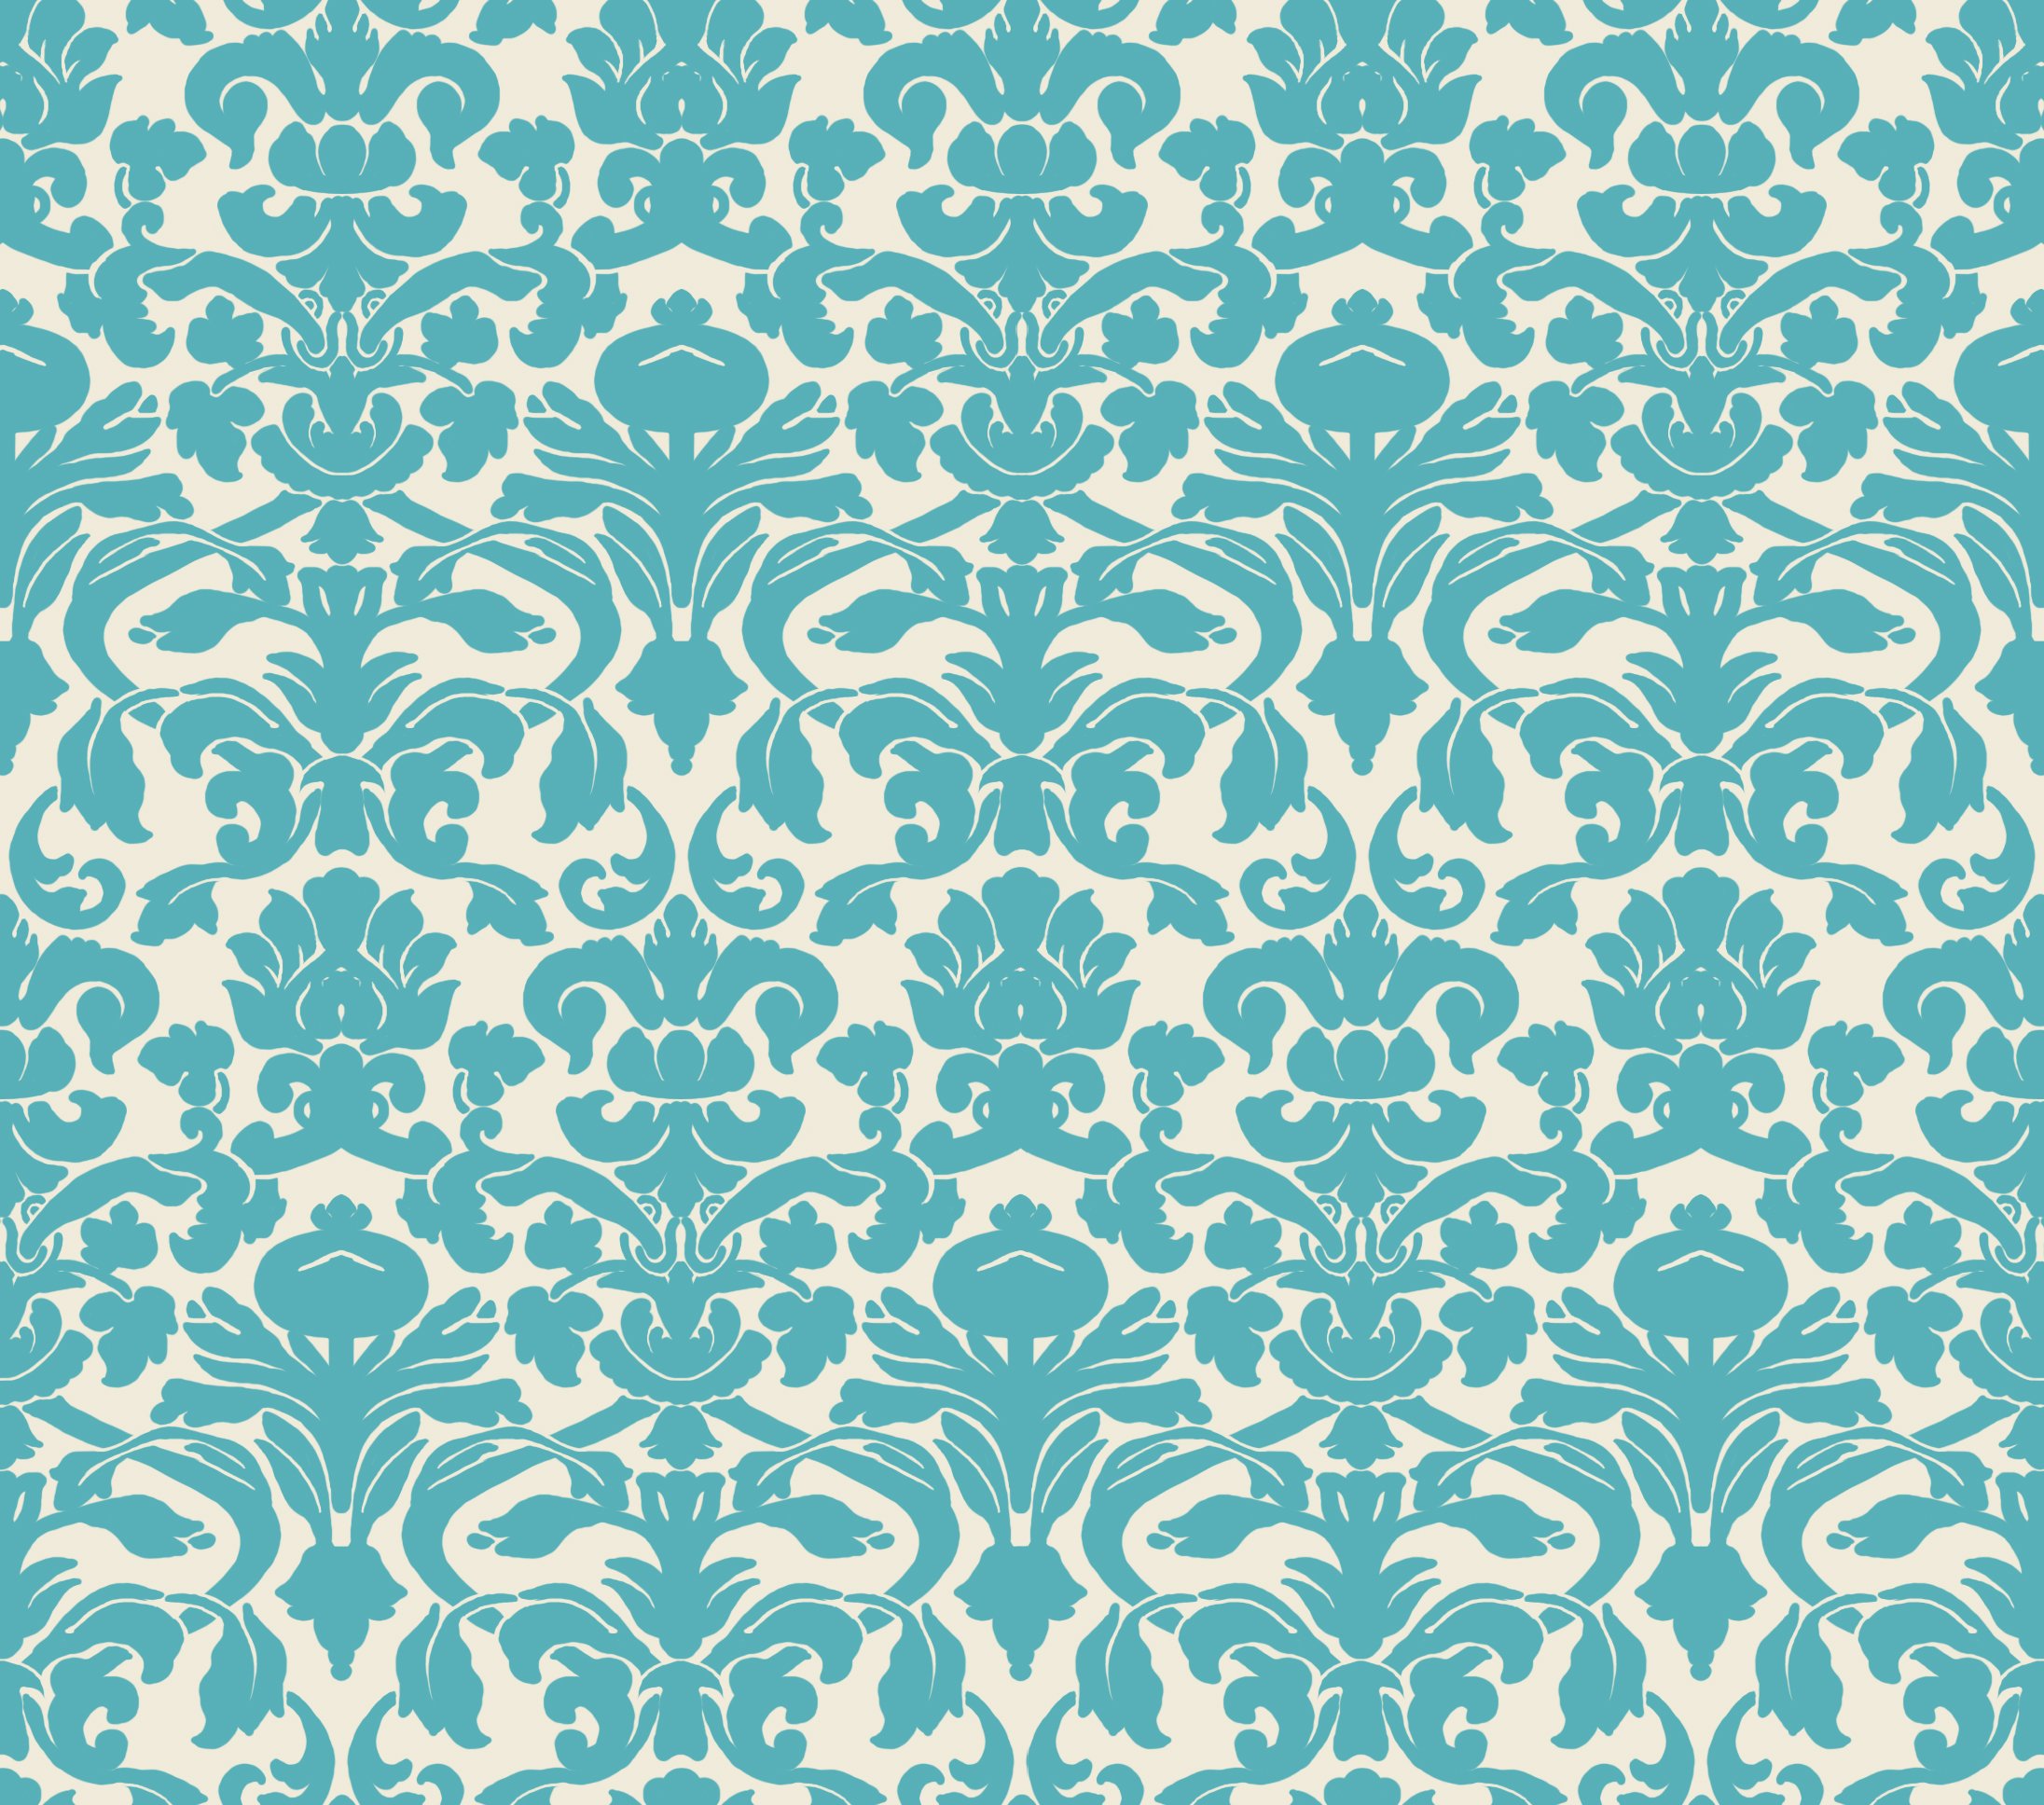  2015 insurrectionx ornate wallpaper pattern edges match up pattern can